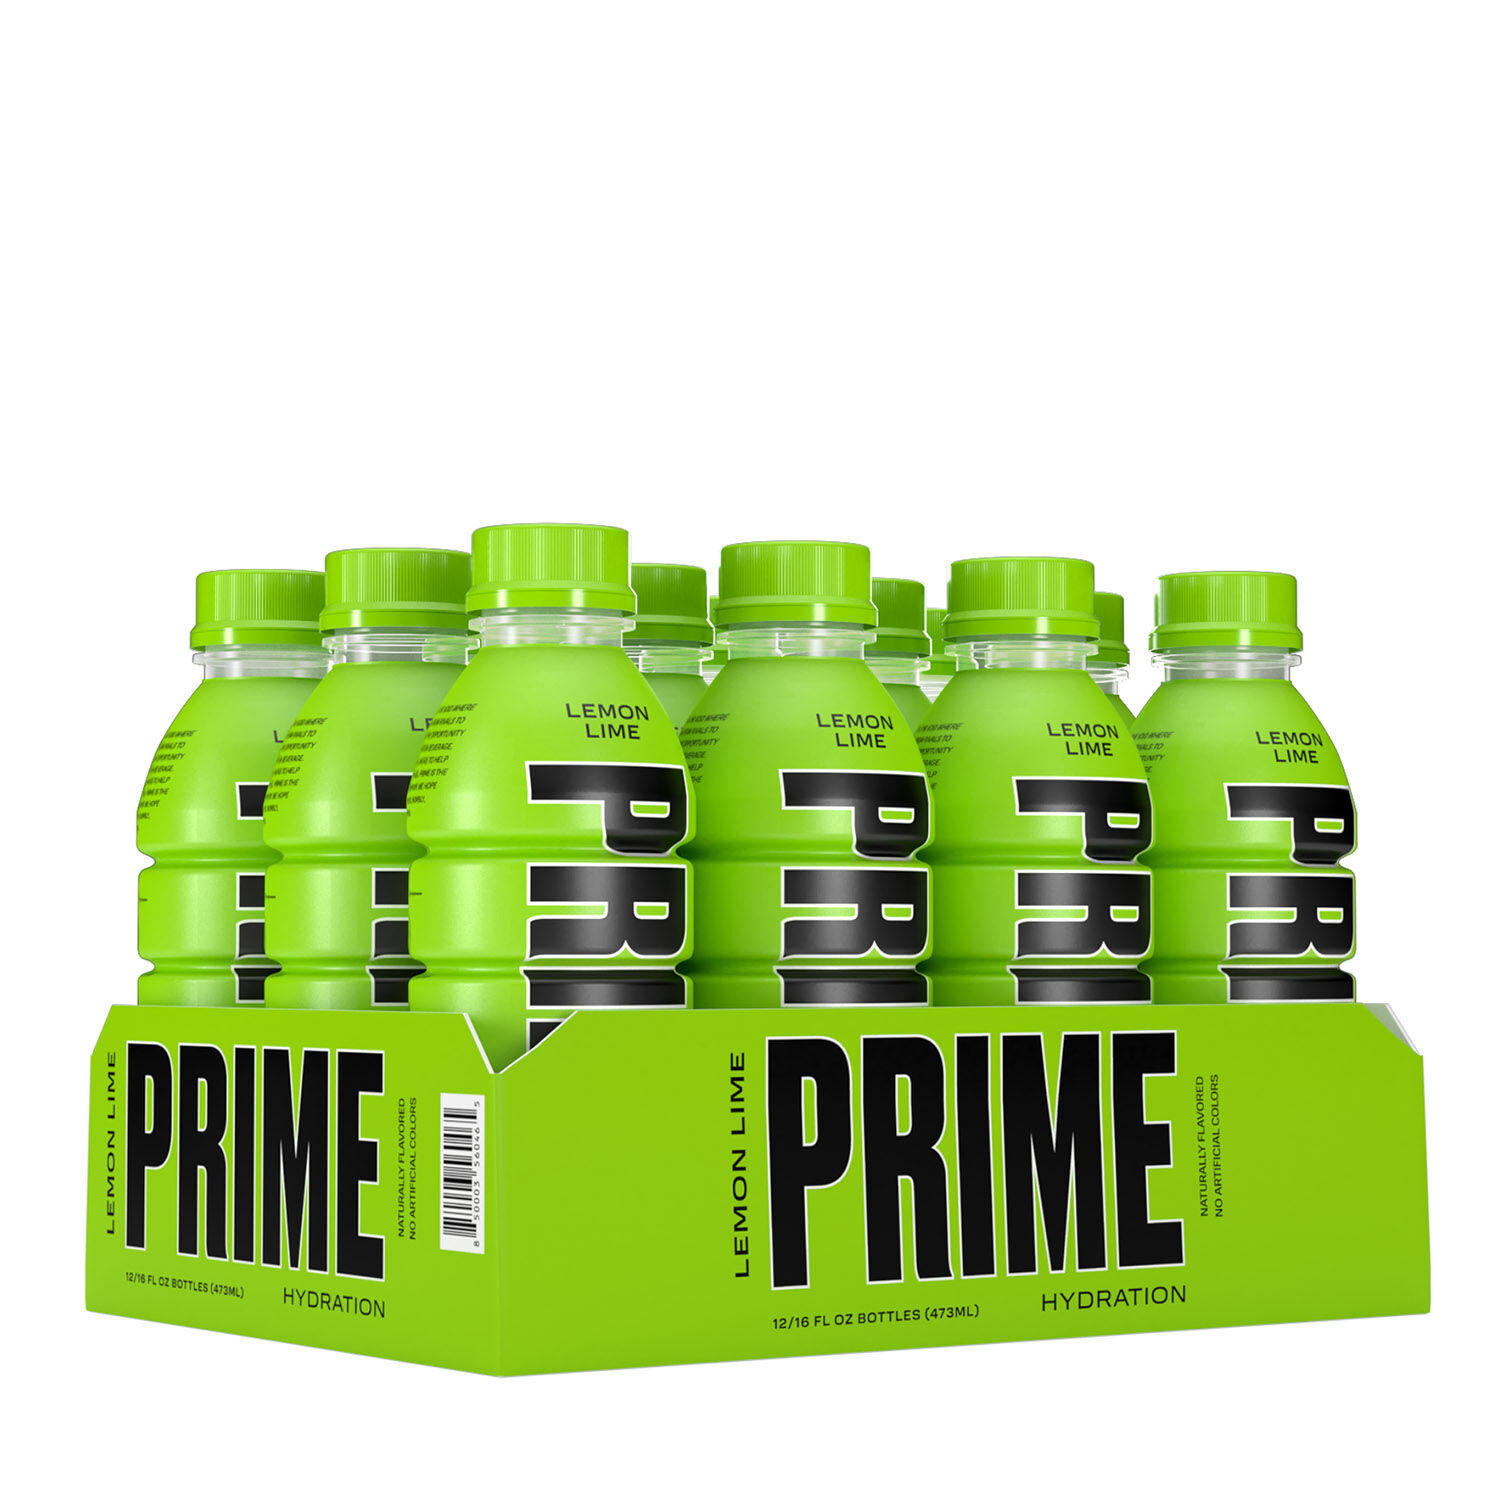 Prime Lemon Lime Sgl Btl (16oz bottle)